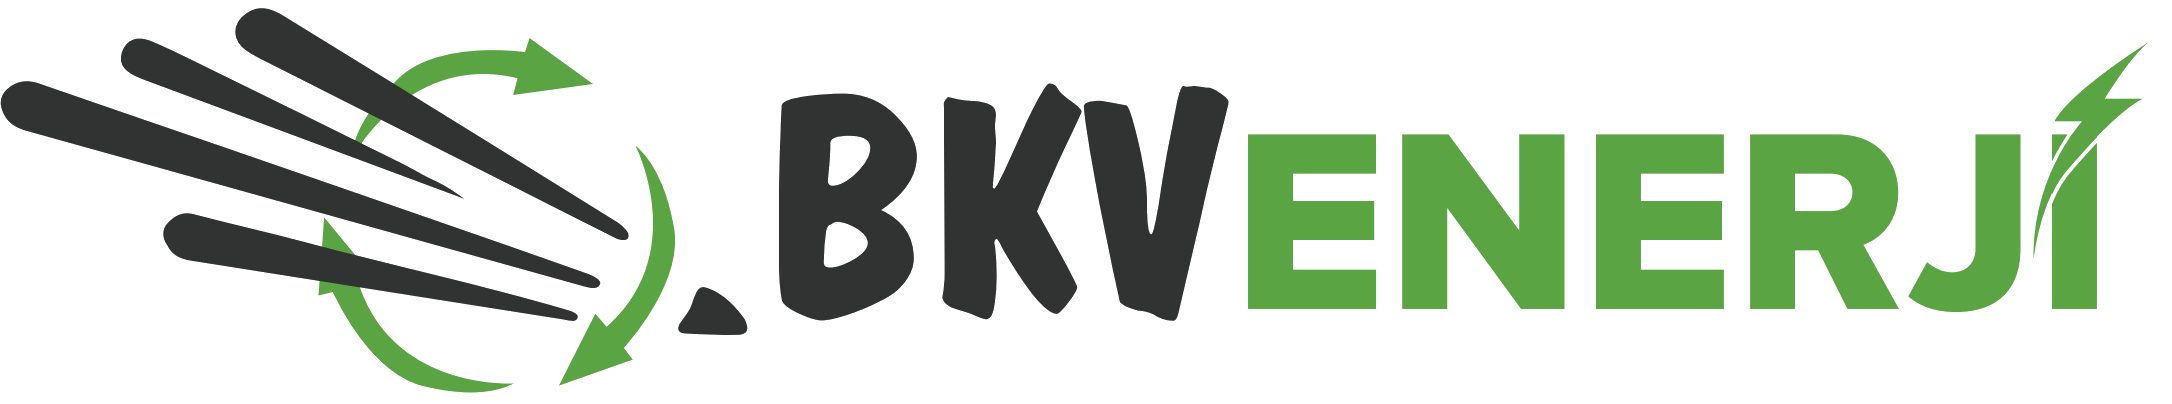 bkvenerji-logo